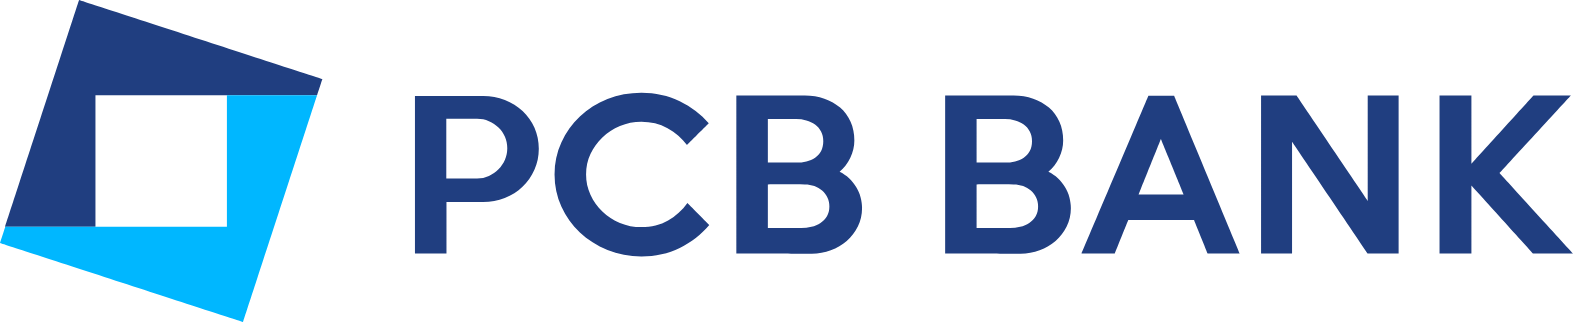 PCB Bancorp logo large (transparent PNG)